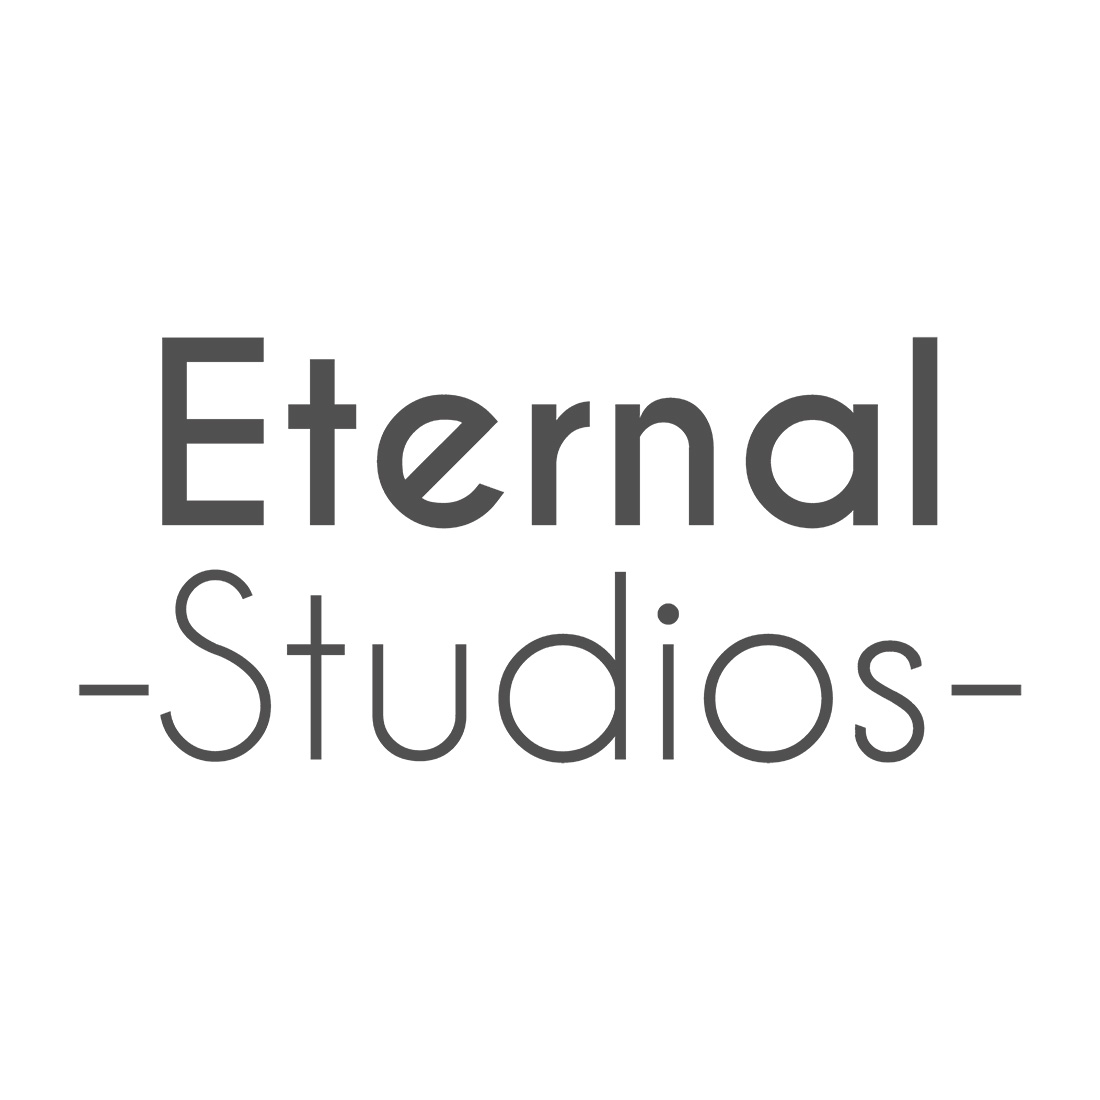 Eternal Studios